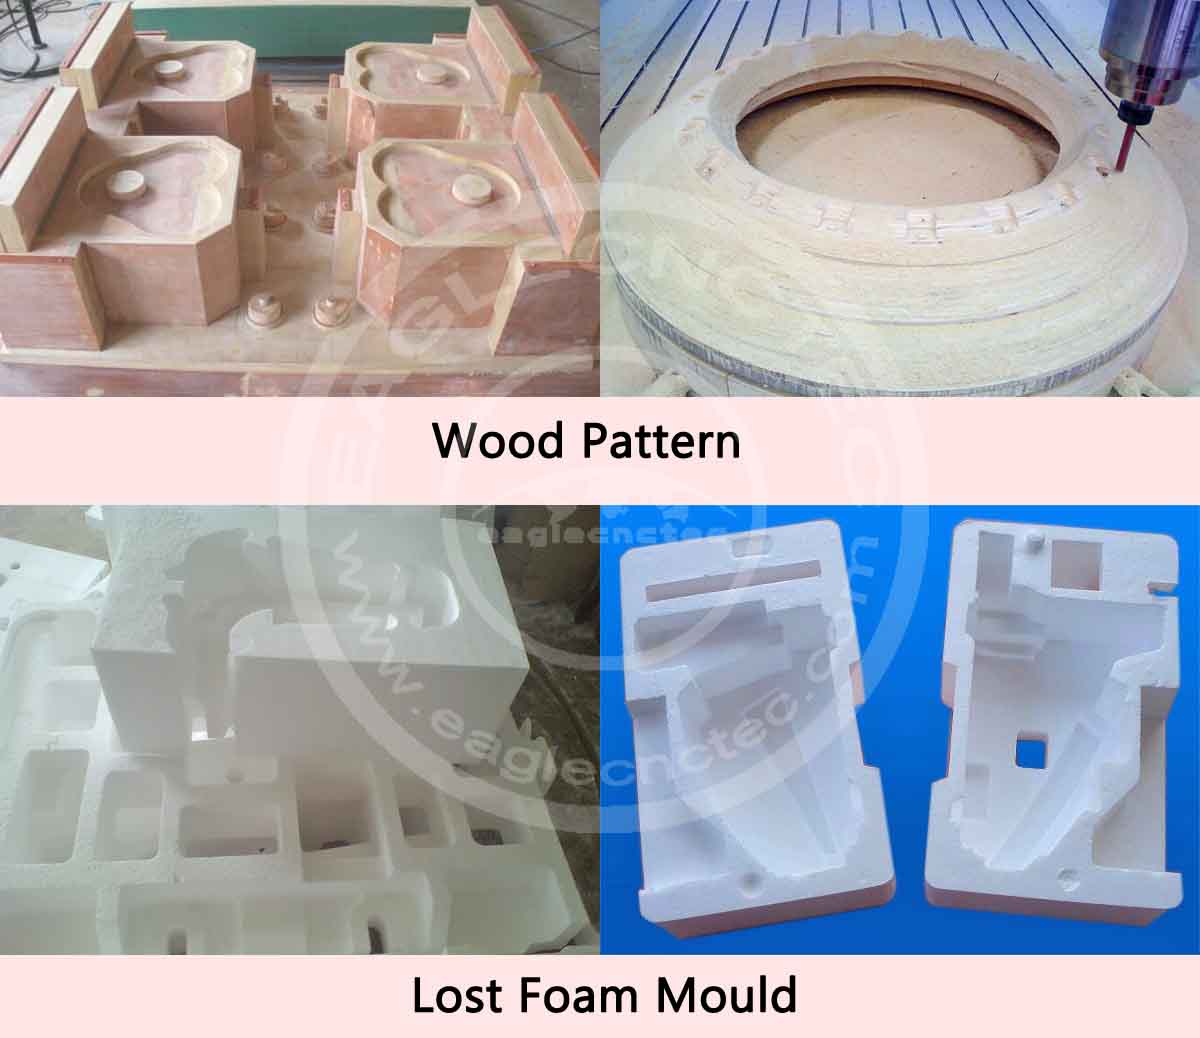 wood pattern and lost foam